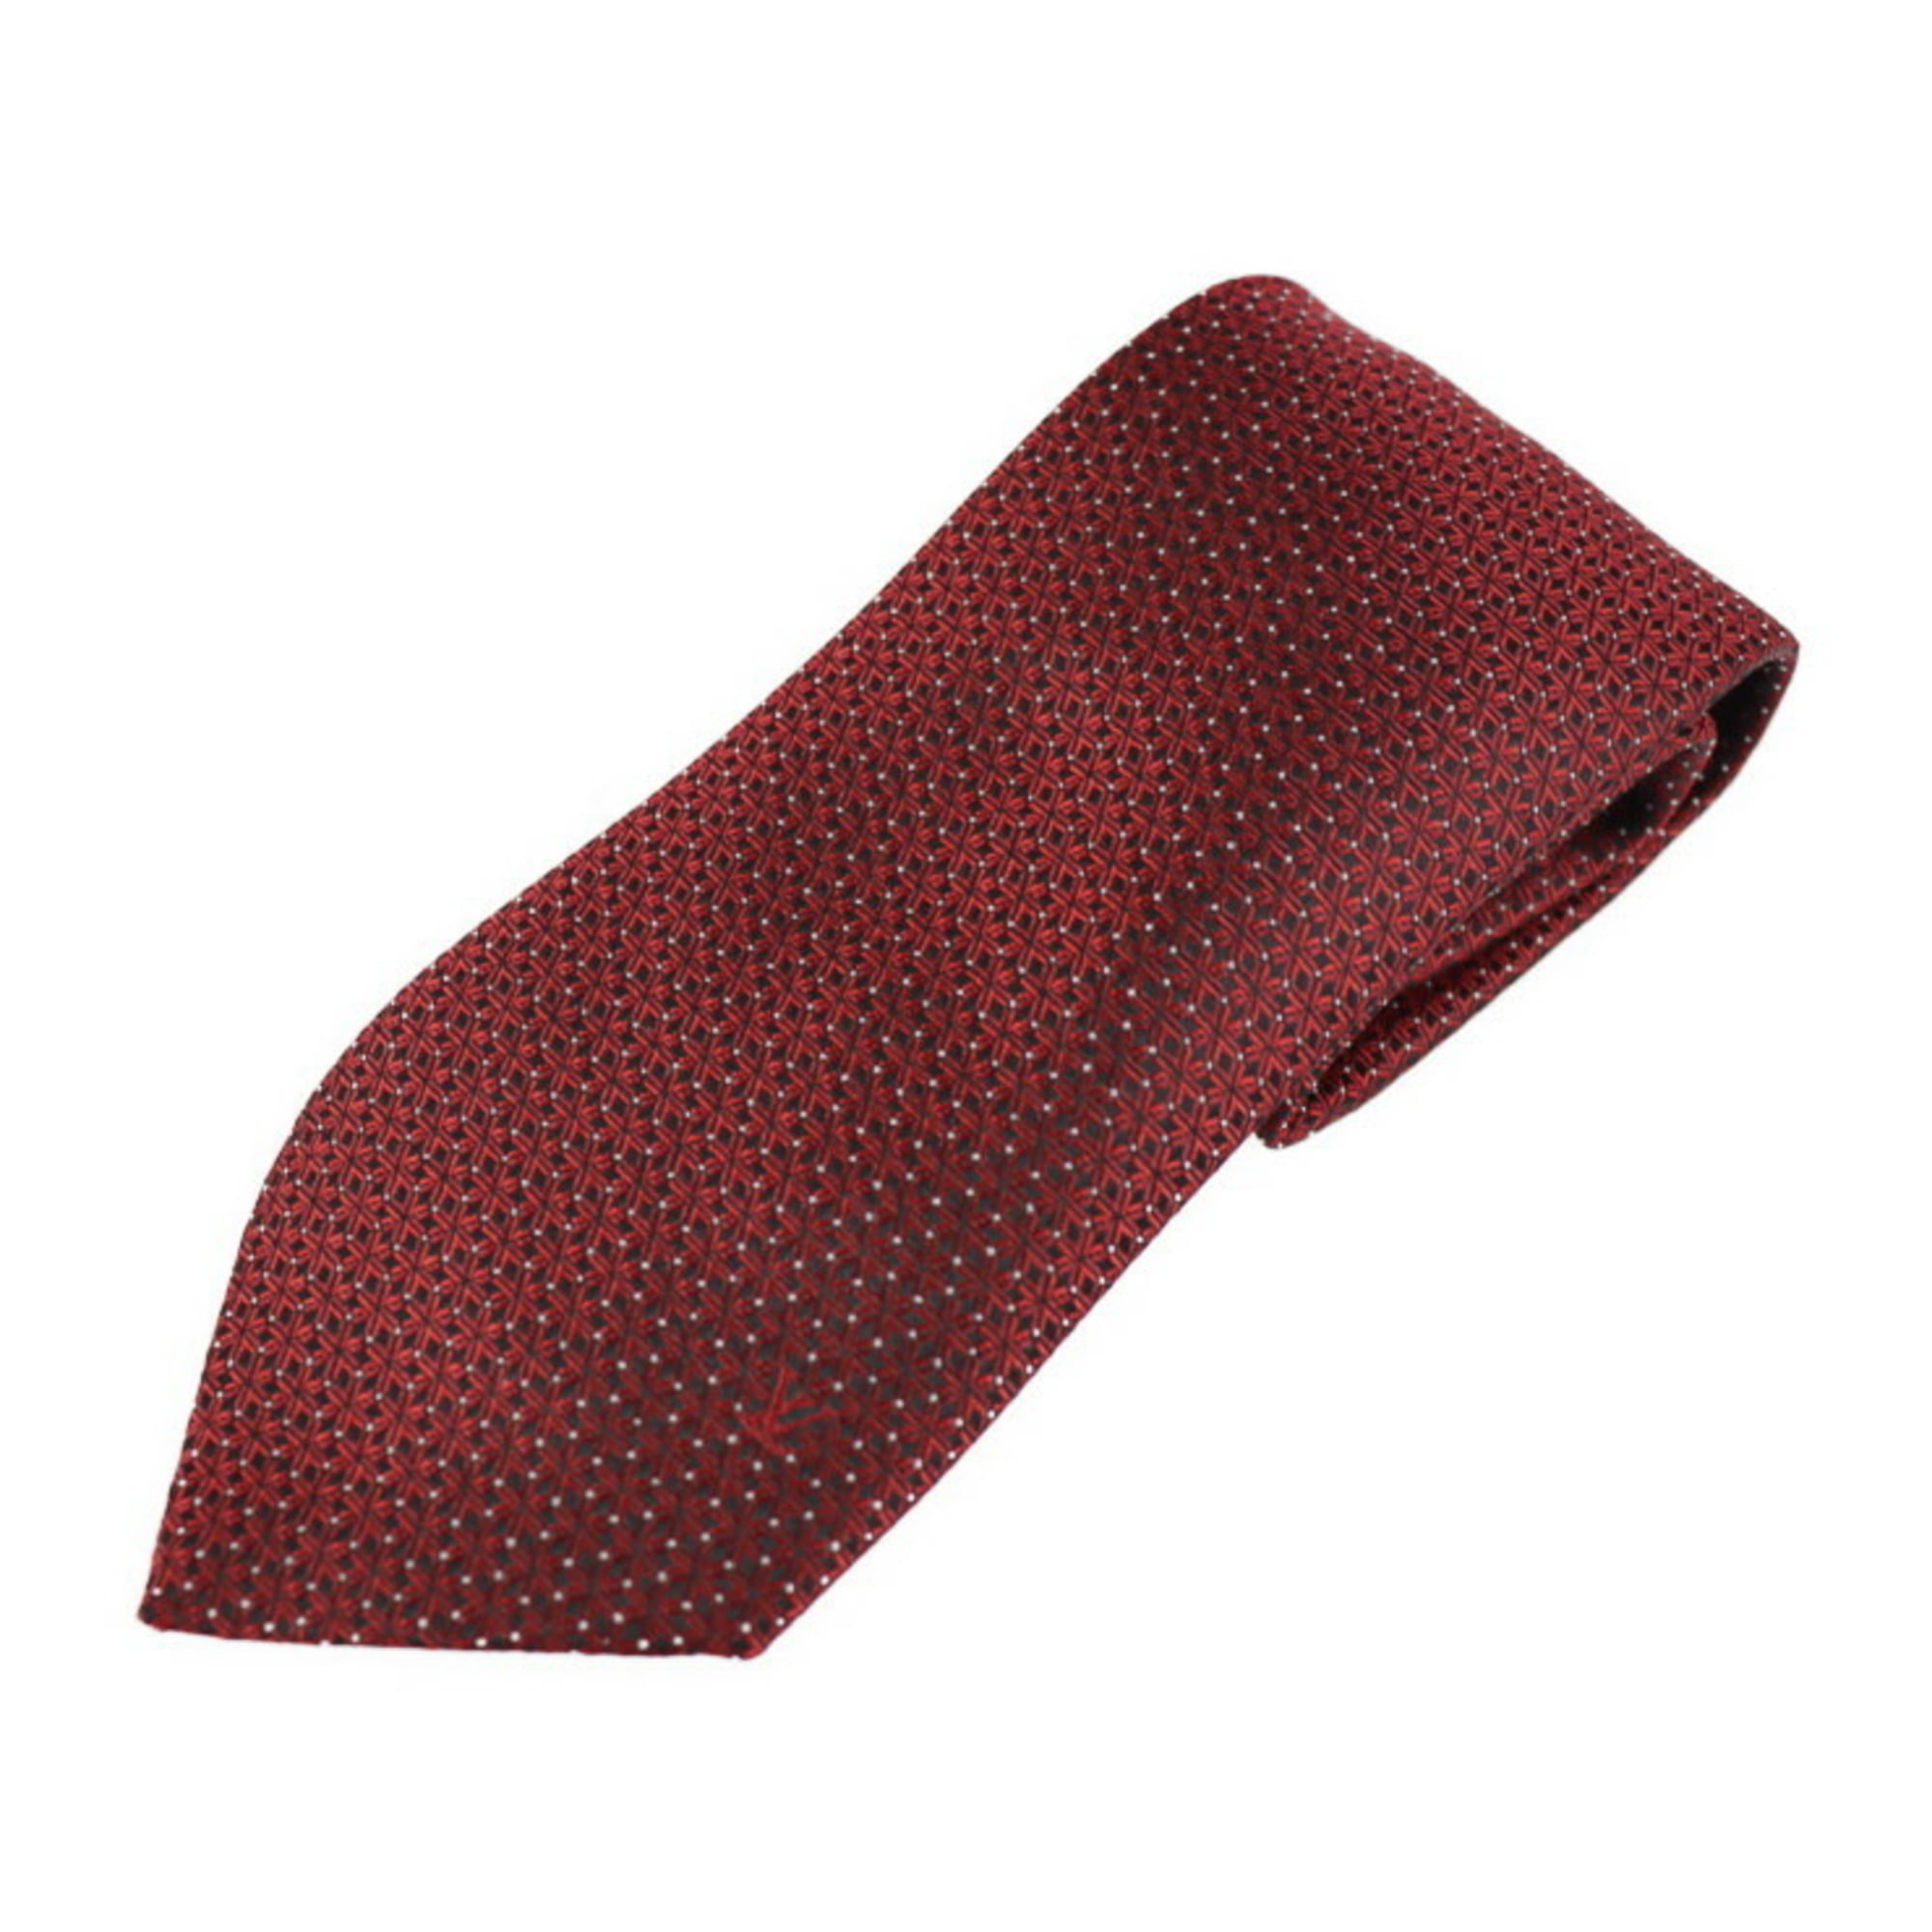 Authentic With Box Louis Vuitton Cravat Ex M78756 Aqua Silk 100 Tie Suit  Simple